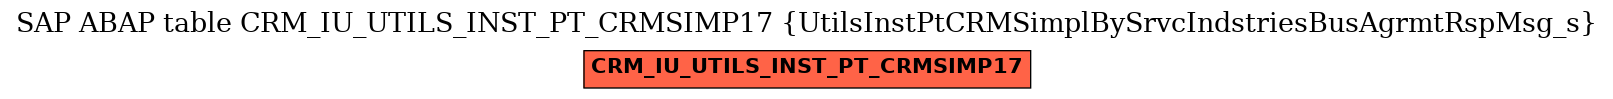 E-R Diagram for table CRM_IU_UTILS_INST_PT_CRMSIMP17 (UtilsInstPtCRMSimplBySrvcIndstriesBusAgrmtRspMsg_s)